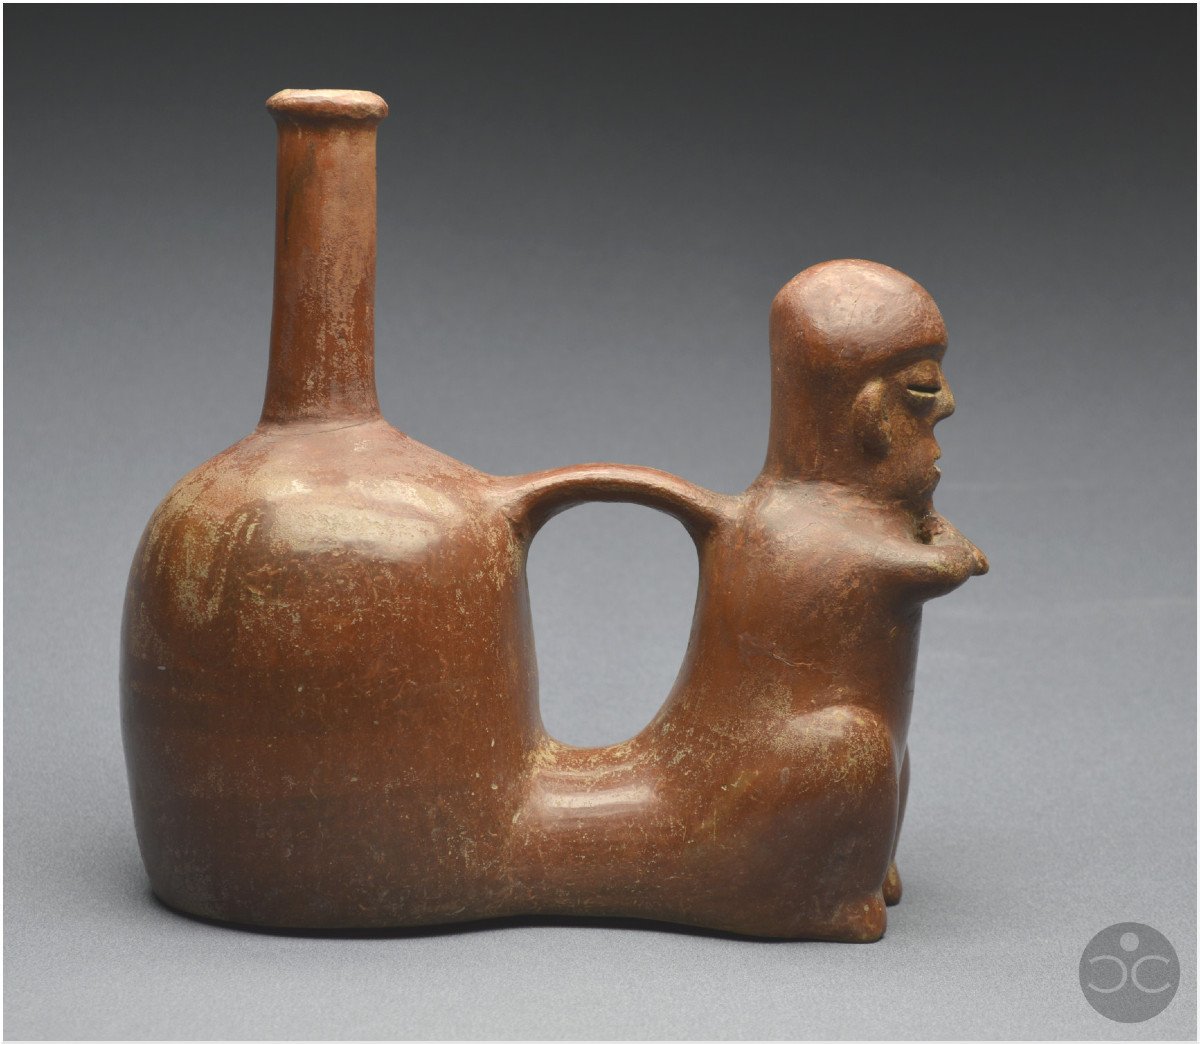 Équateur, 1000 - 500 av J.-C, Culture Chorrera, Vase rituel anthropomorphe, Céramique vernissée-photo-1